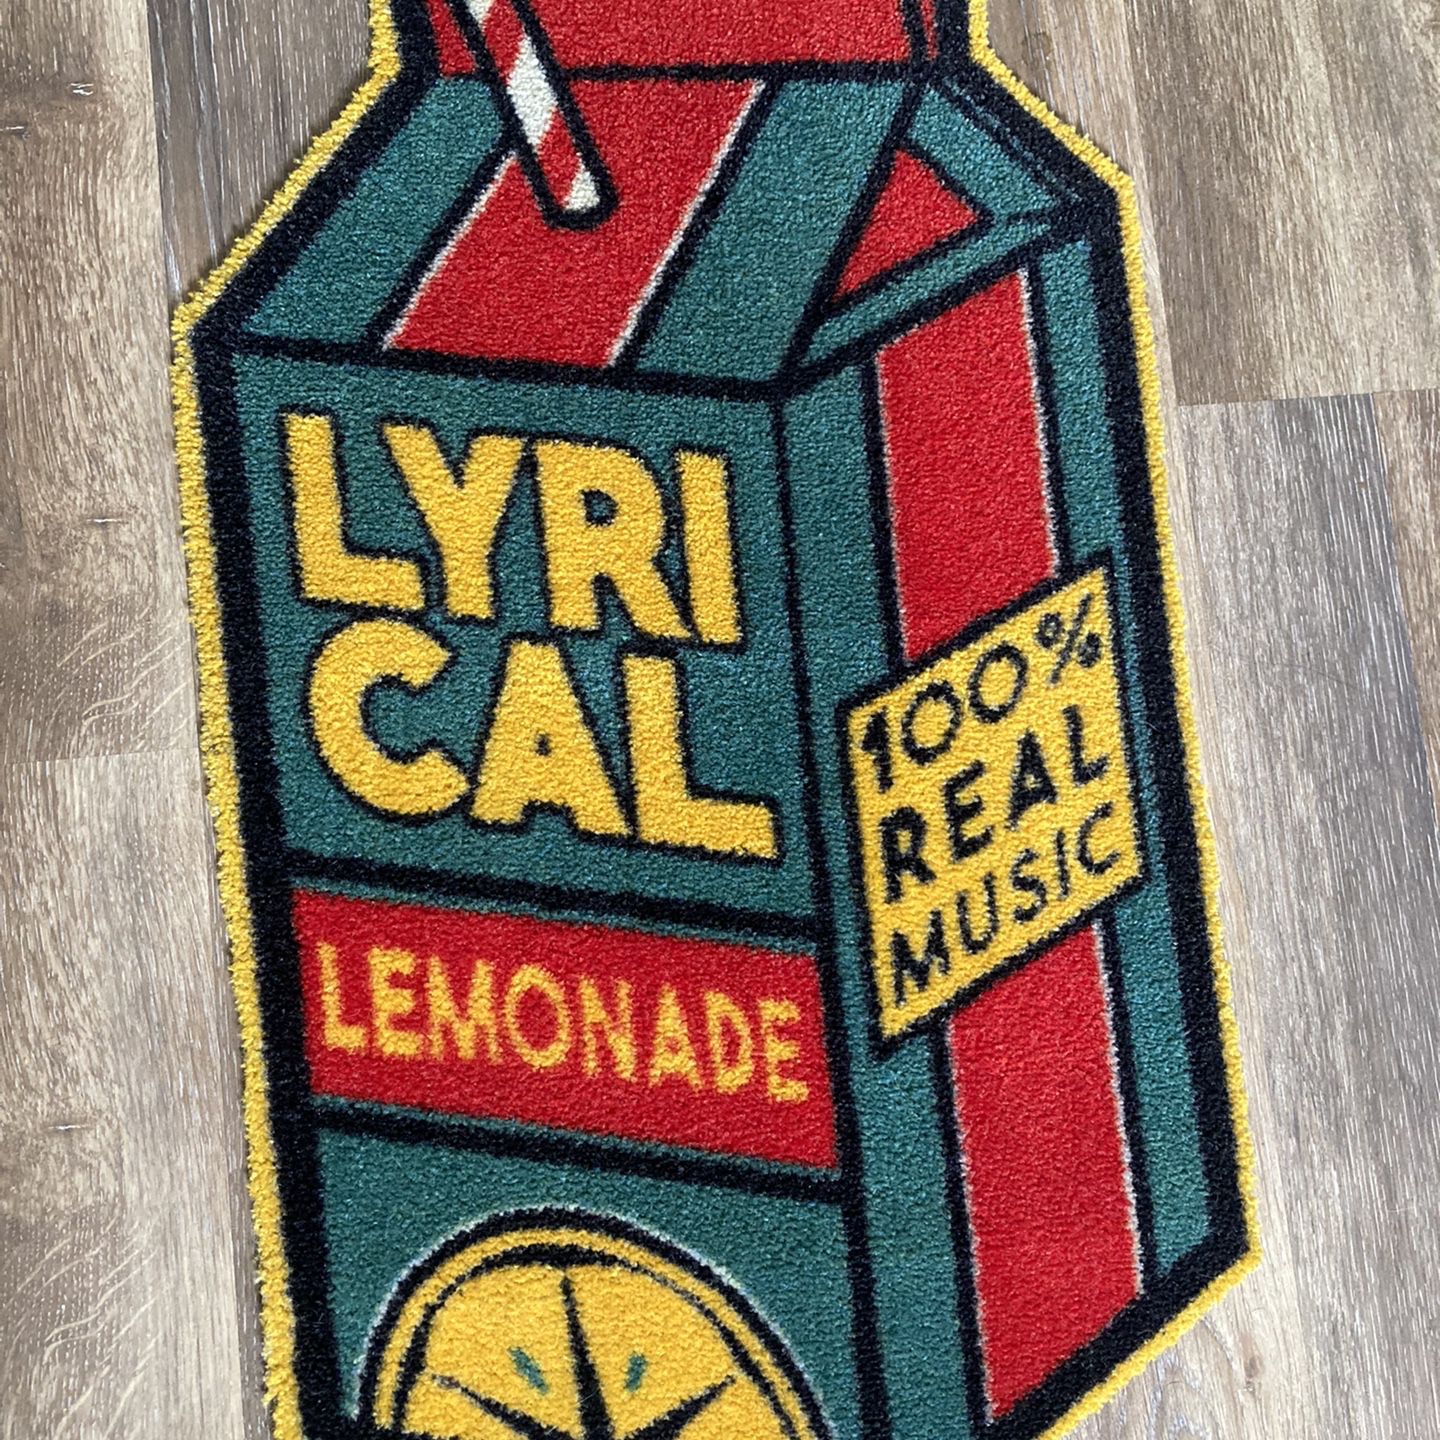 Lyrical Lemonade Gucci Rug for Sale in Salinas, CA - OfferUp